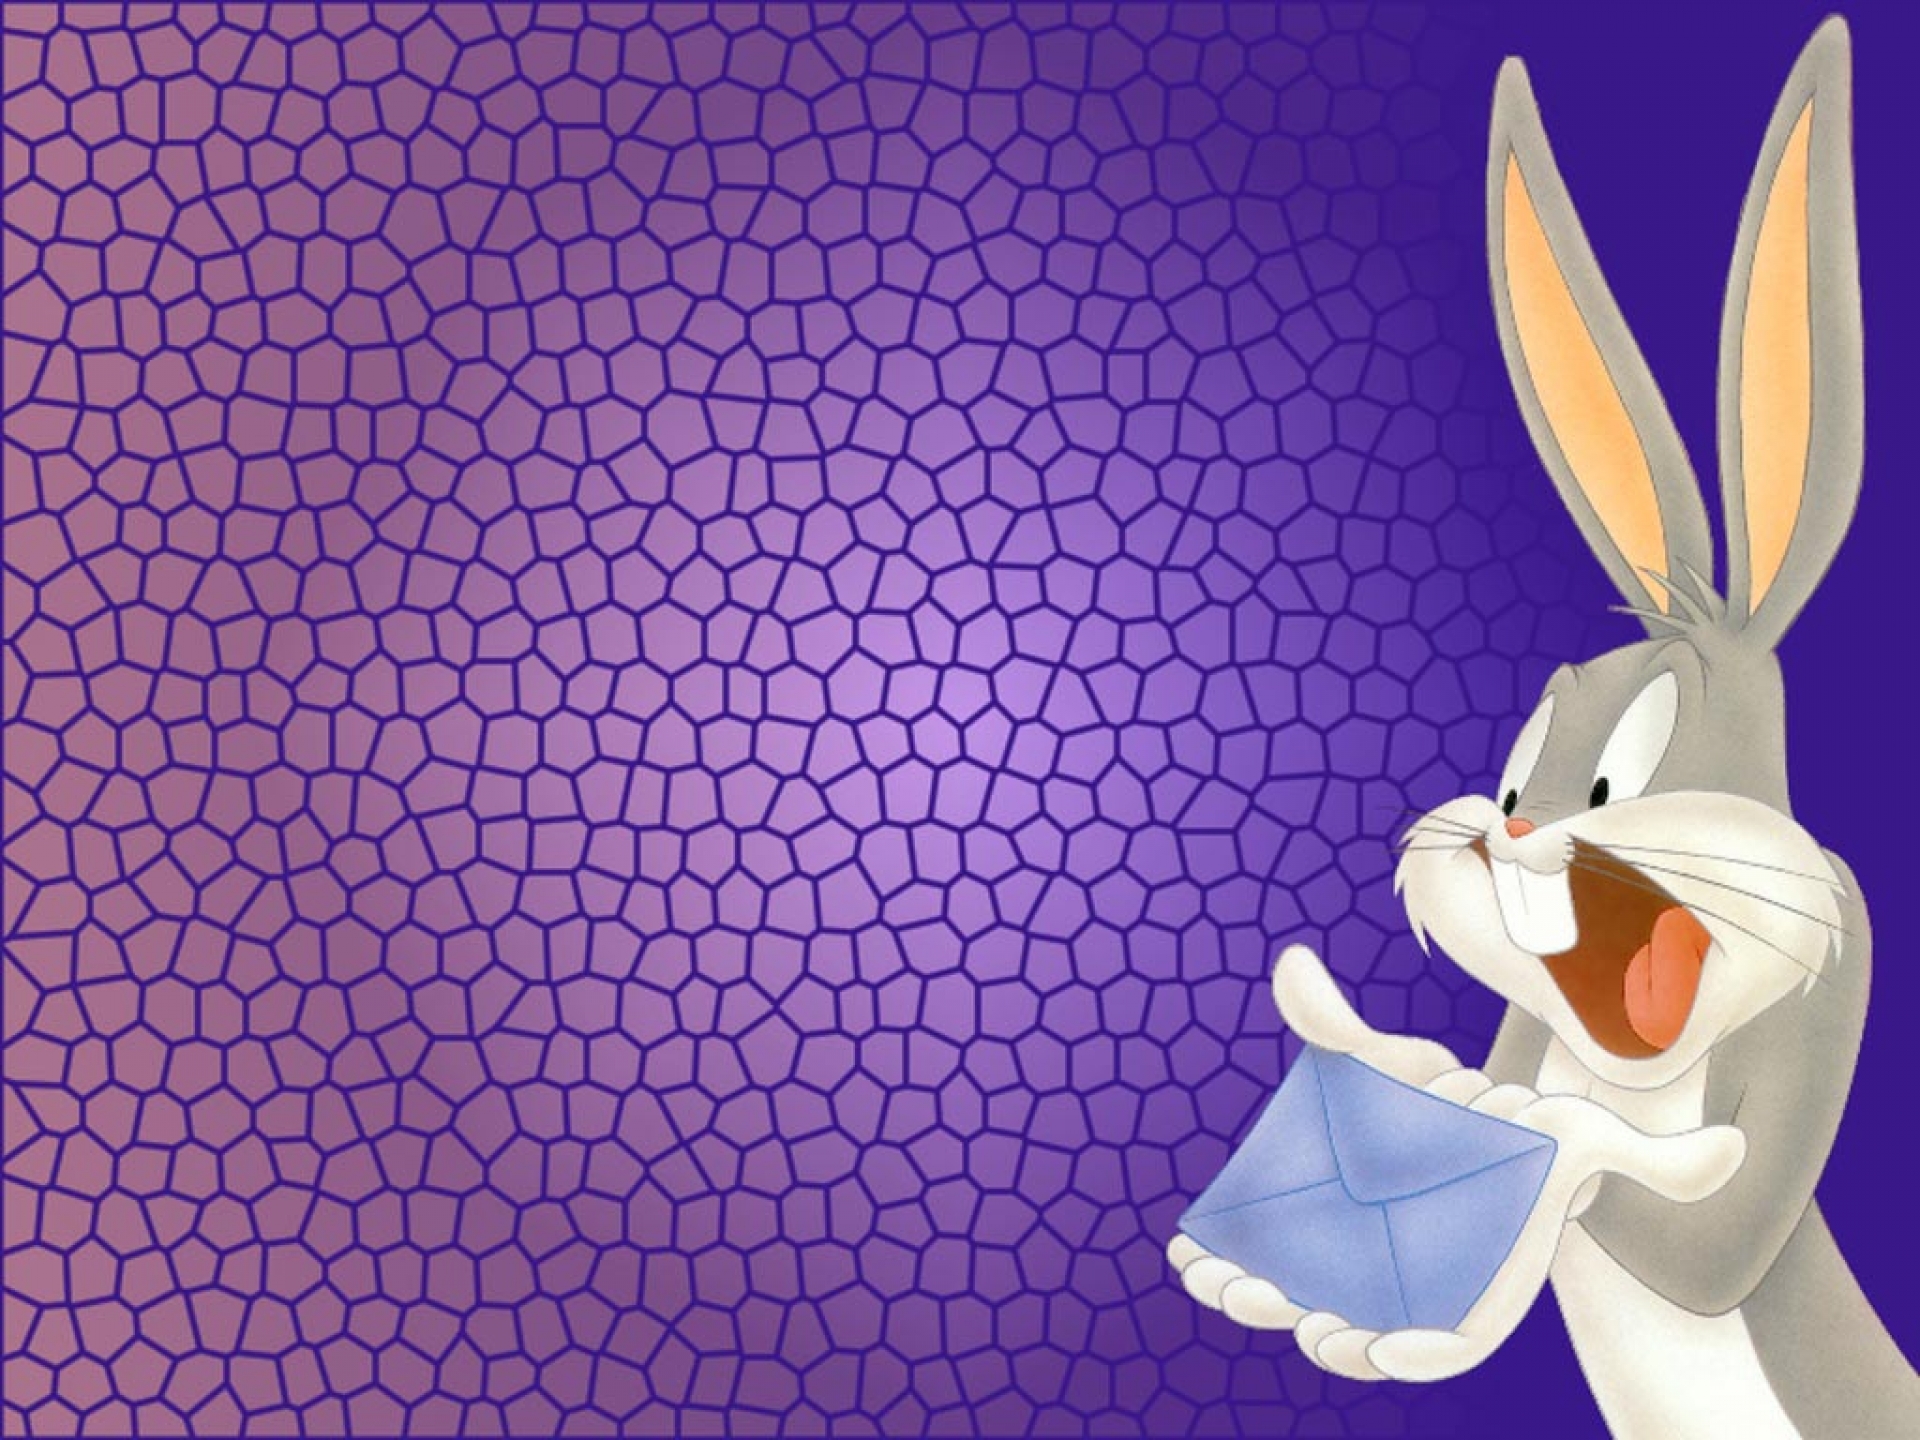 Handy-Wallpaper Bugs Bunny, Looney Tunes, Fernsehserien kostenlos herunterladen.